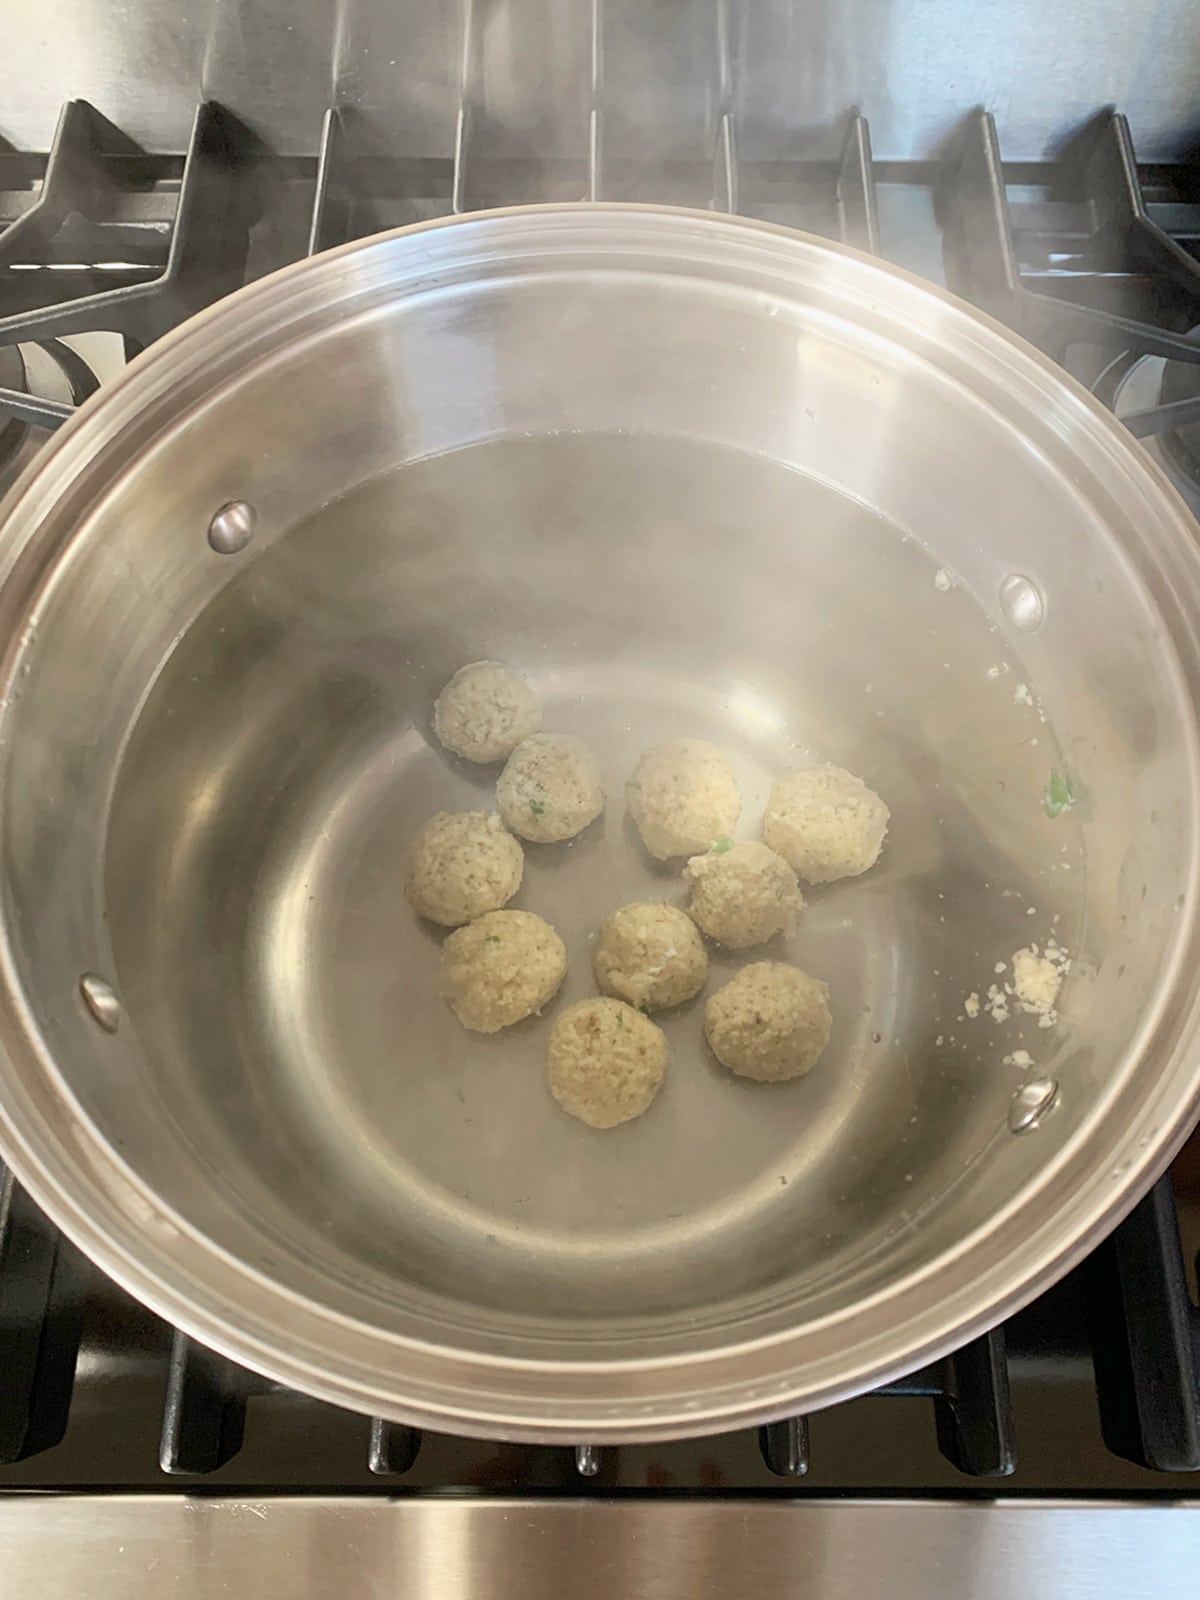 Matzo balls in pot at the bottom.